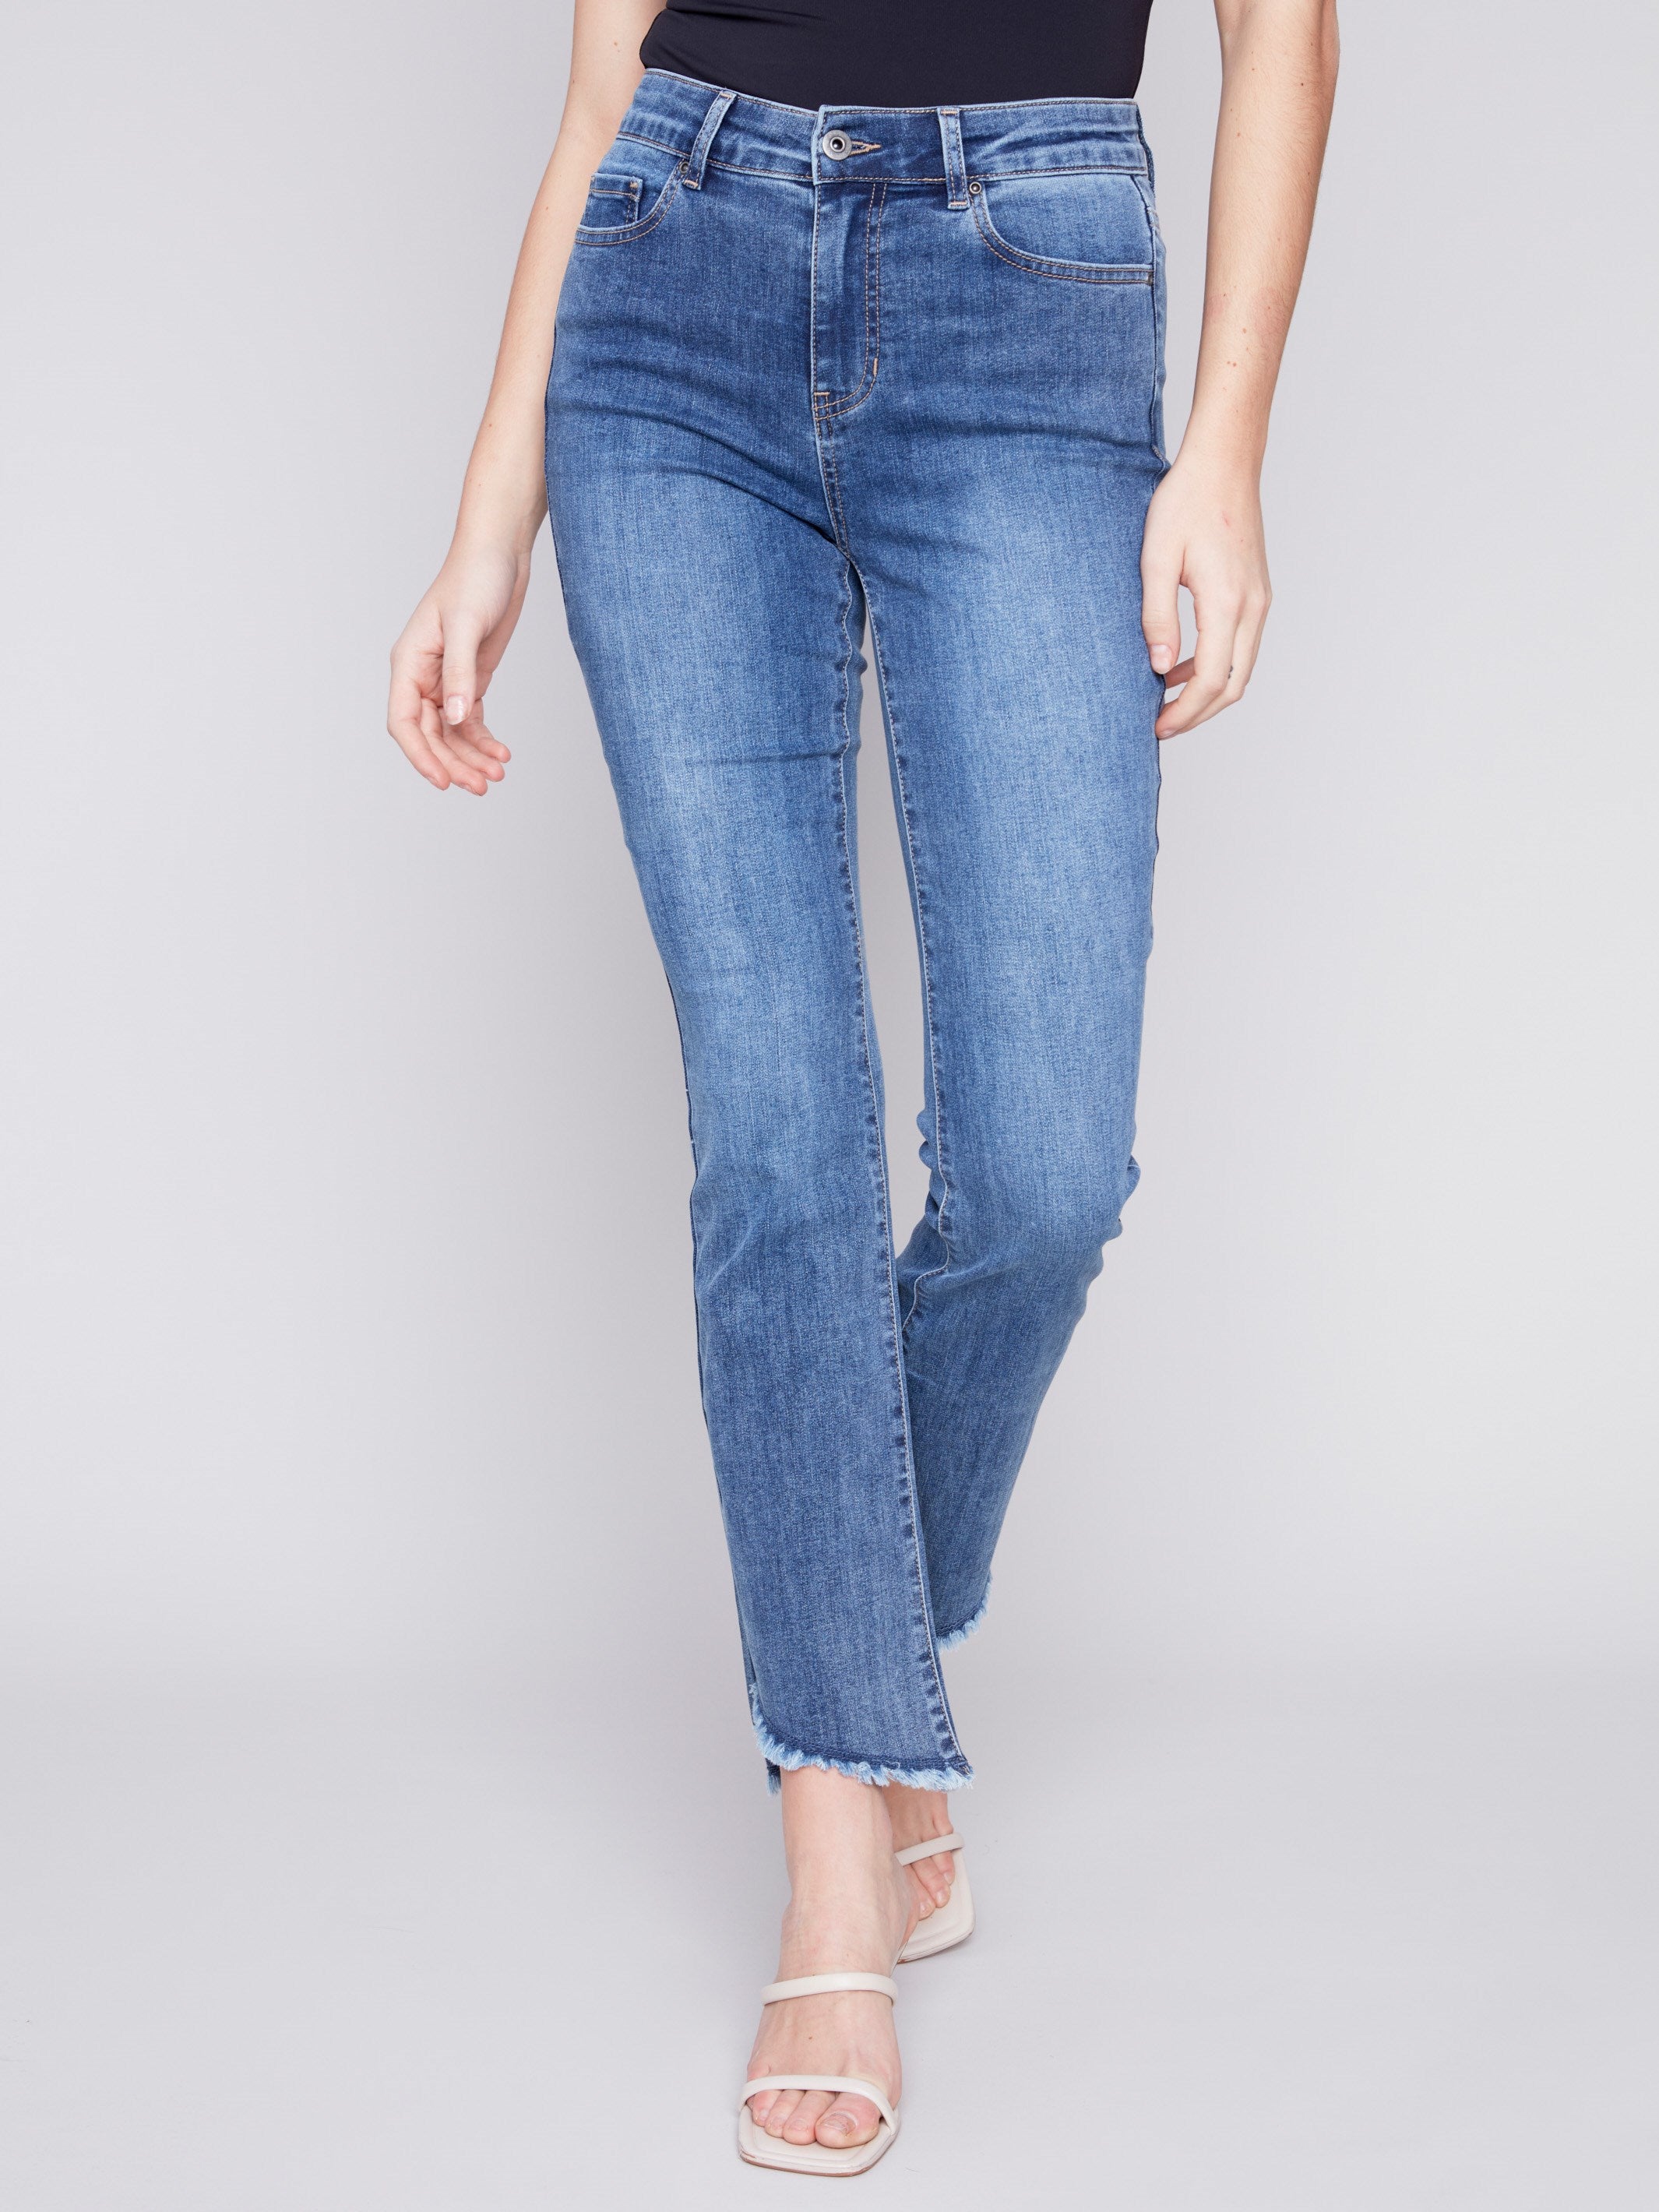 Charlie B Bootcut Jeans with Asymmetrical Hem - Medium Blue - Image 6